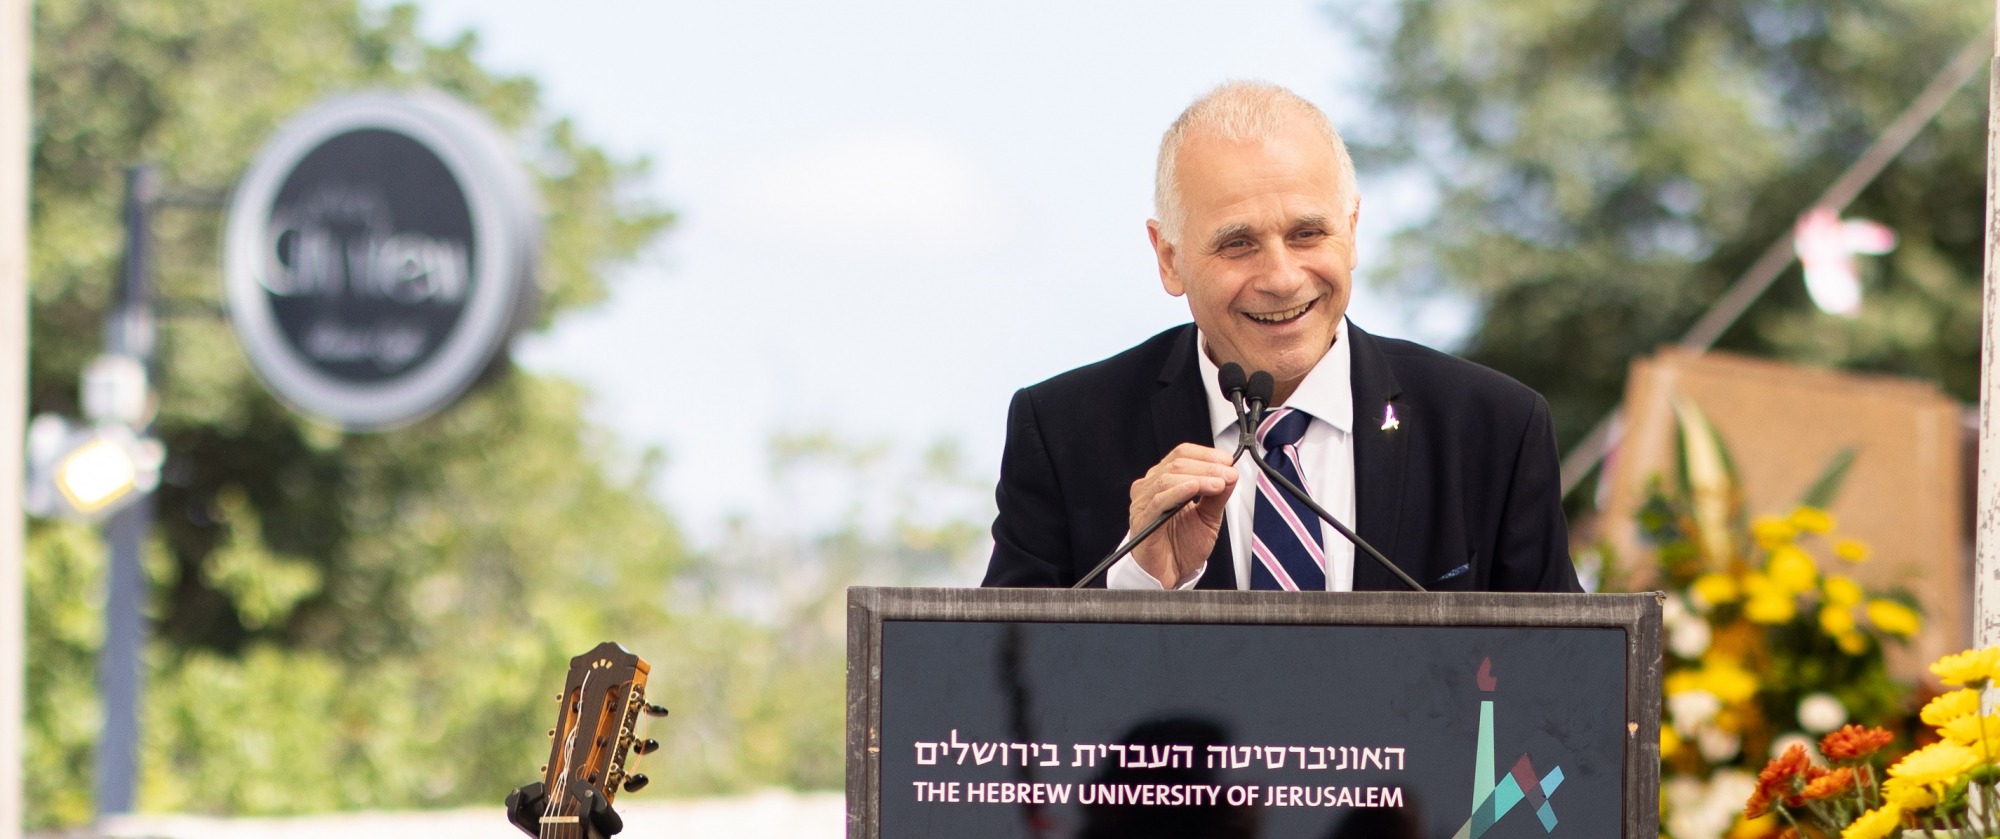 President of the Hebrew University of Jerusalem (Photo: Igor Farberov)